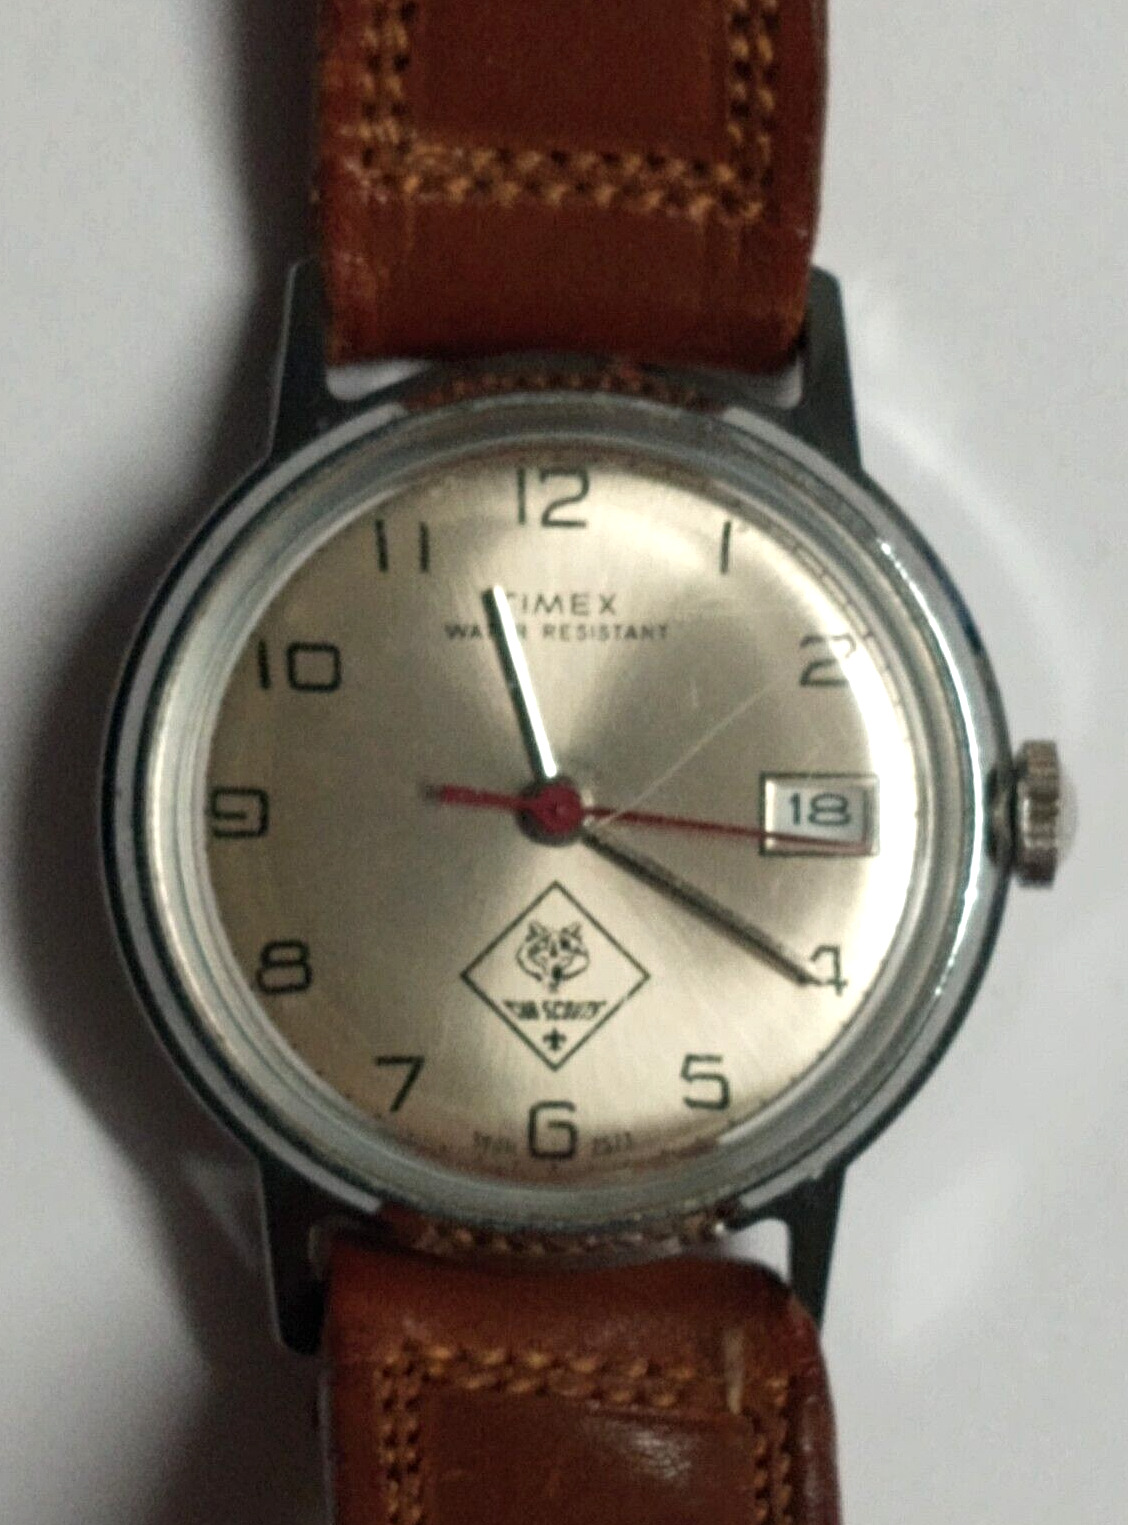 Timex Cub Scout Wrist Watch w/ Leather Kreisler Band Vintage c1970s *Works*